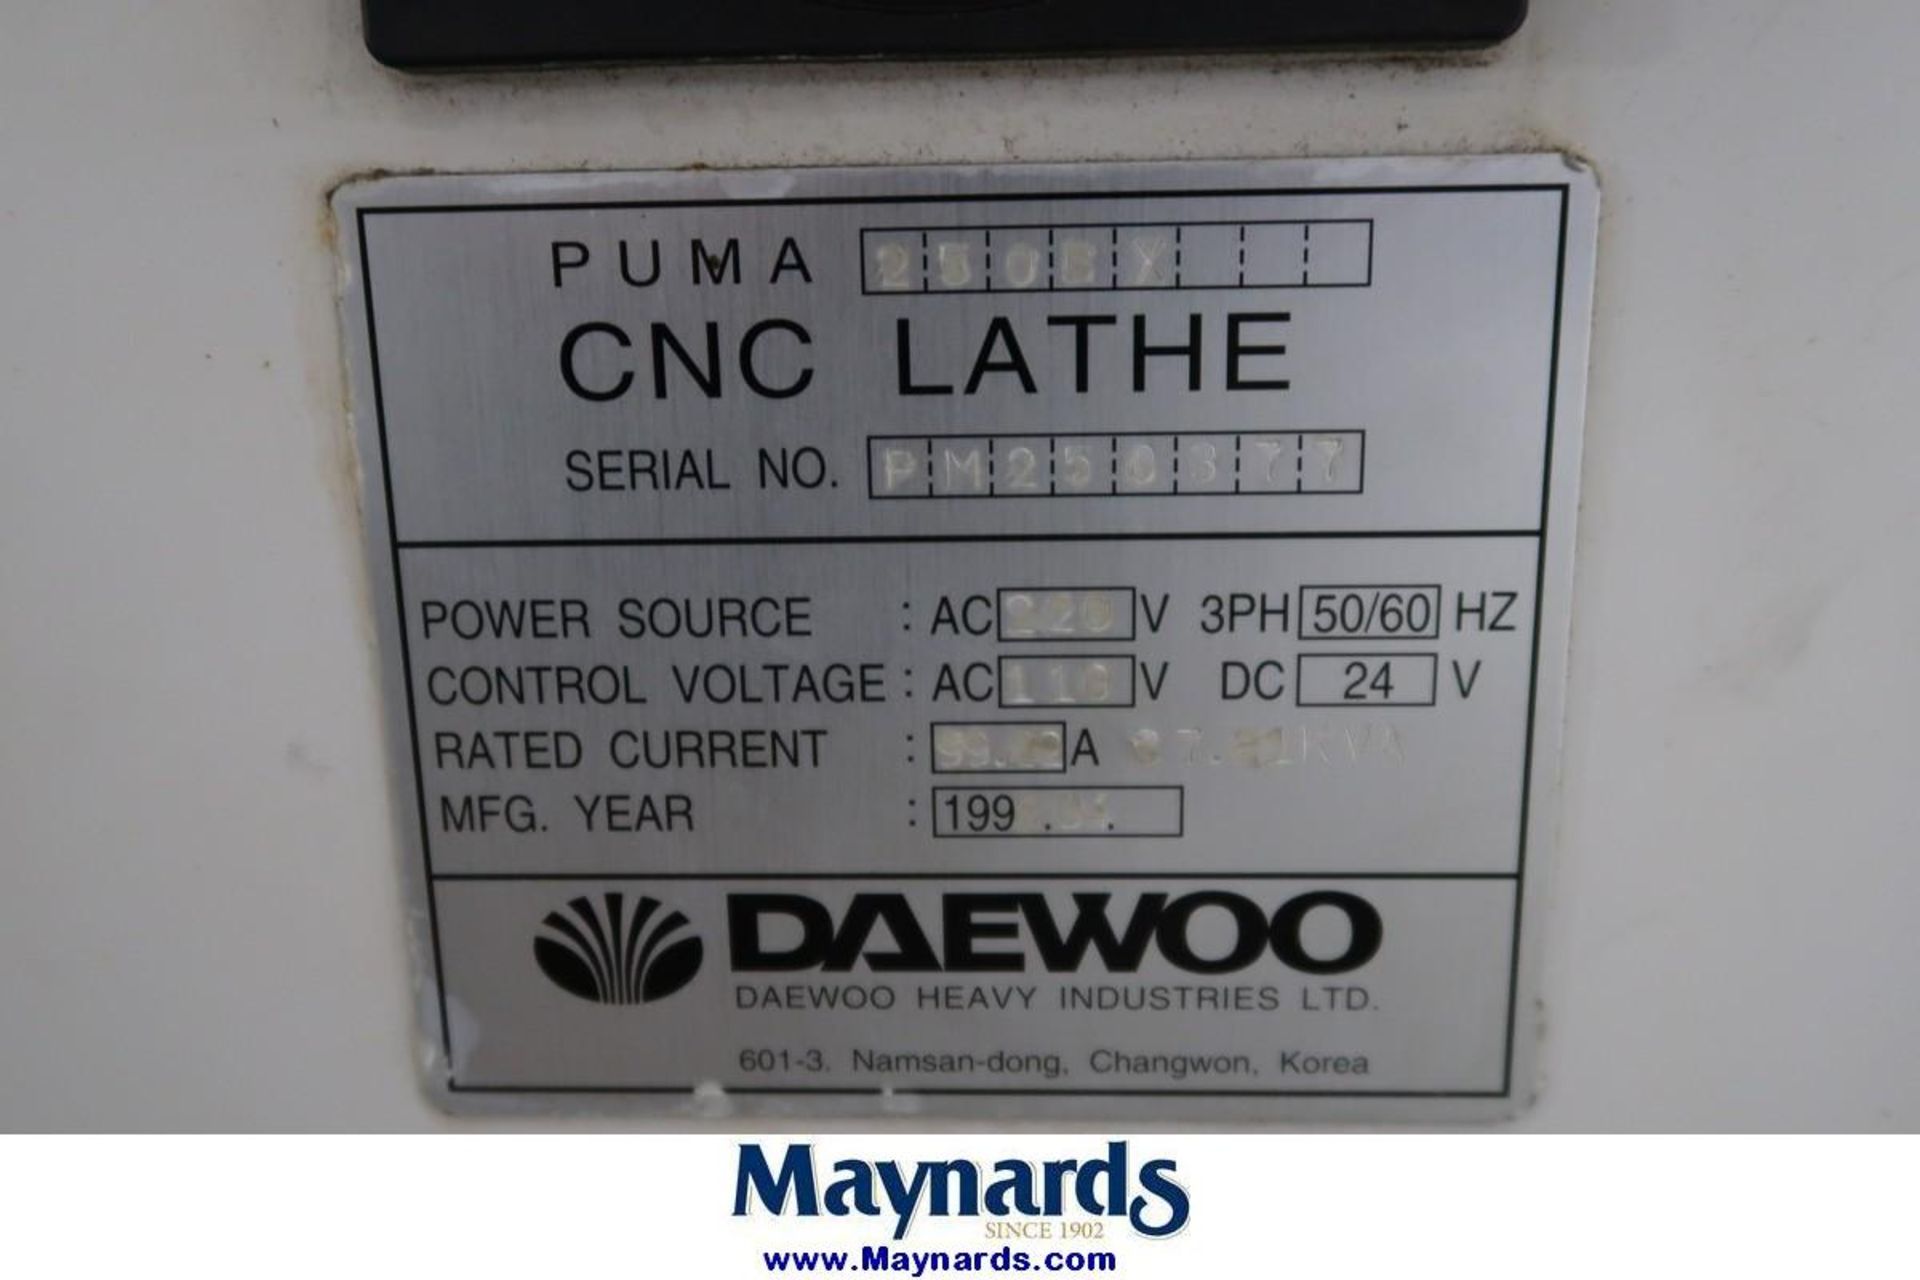 1980 Daewoo Puma 250 CNC Turning Center - Image 14 of 16